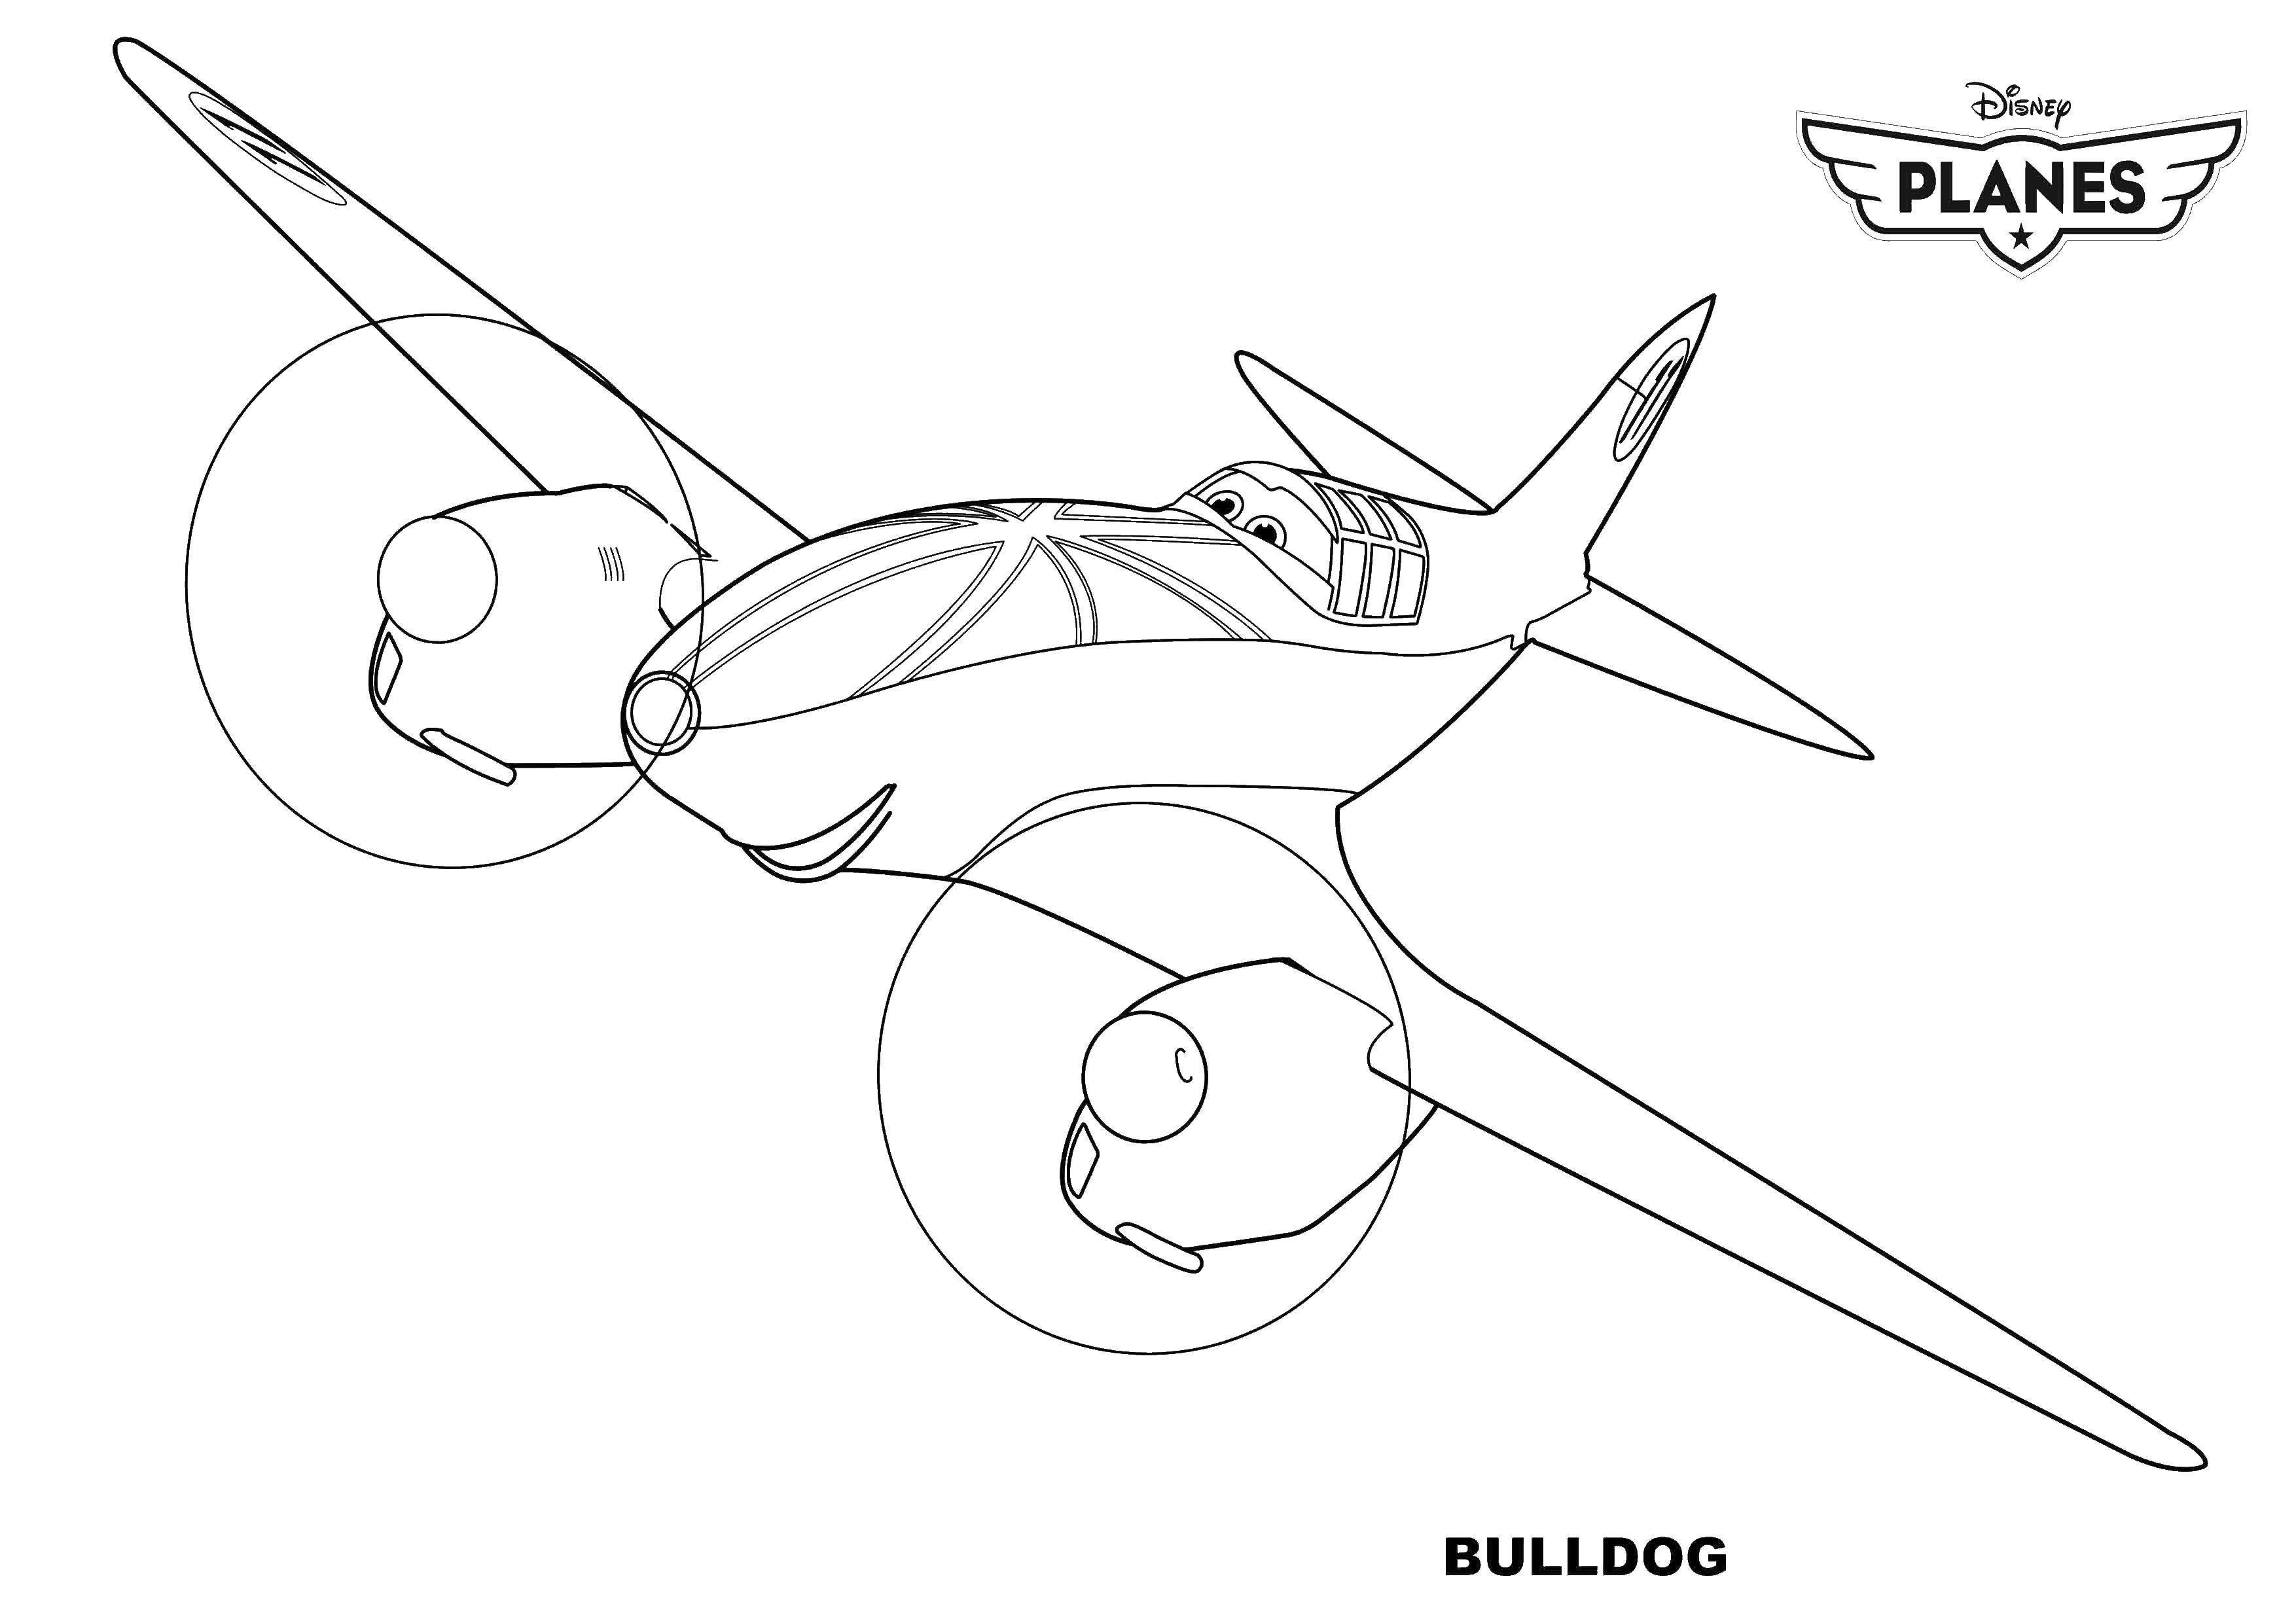 Coloring The plane is bulldog. Category Disney cartoons. Tags:  Plane cartoon.